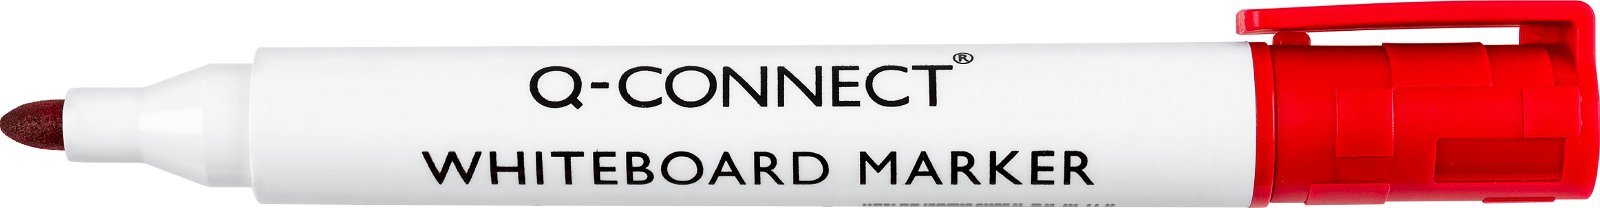 Q-connect whiteboardmarker rod